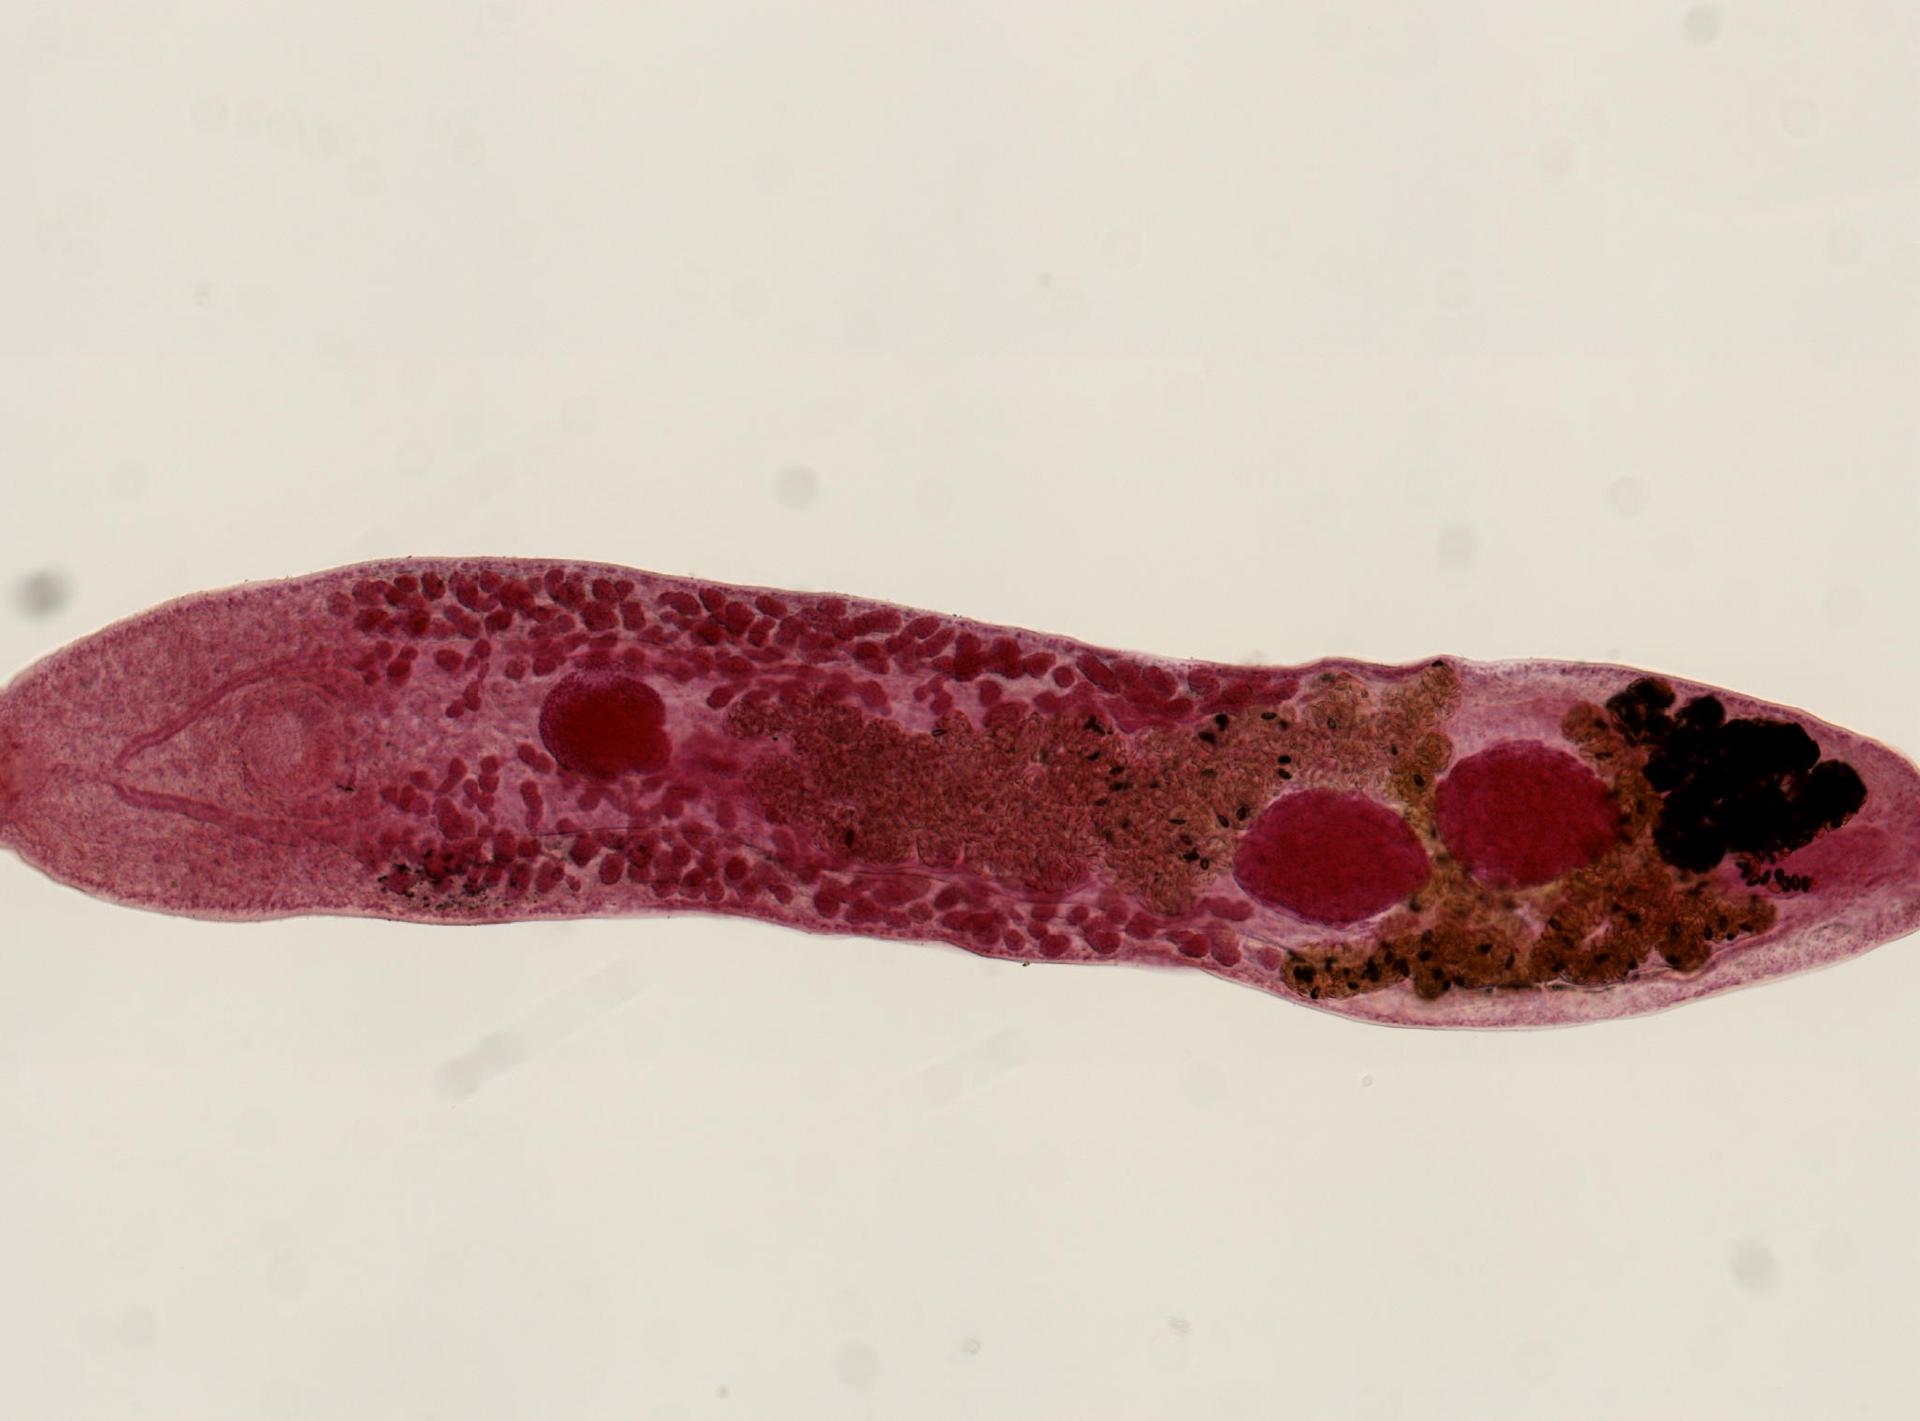 Urotrematidae image